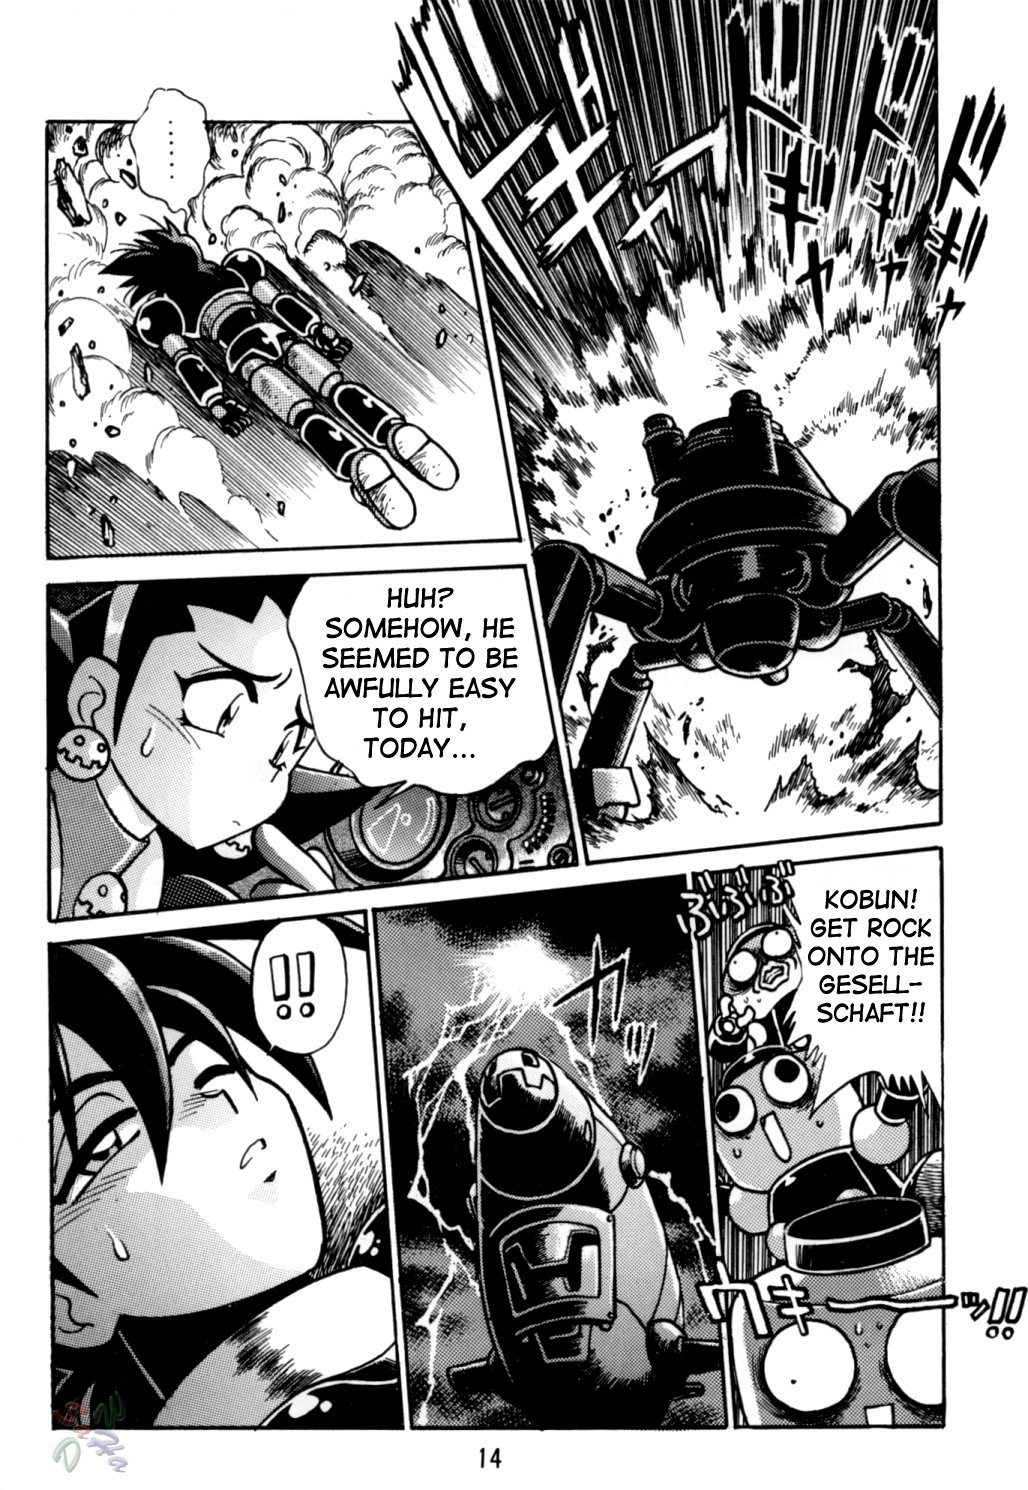 Rock Buster Go Shot!! mega man legends 14 hentai manga